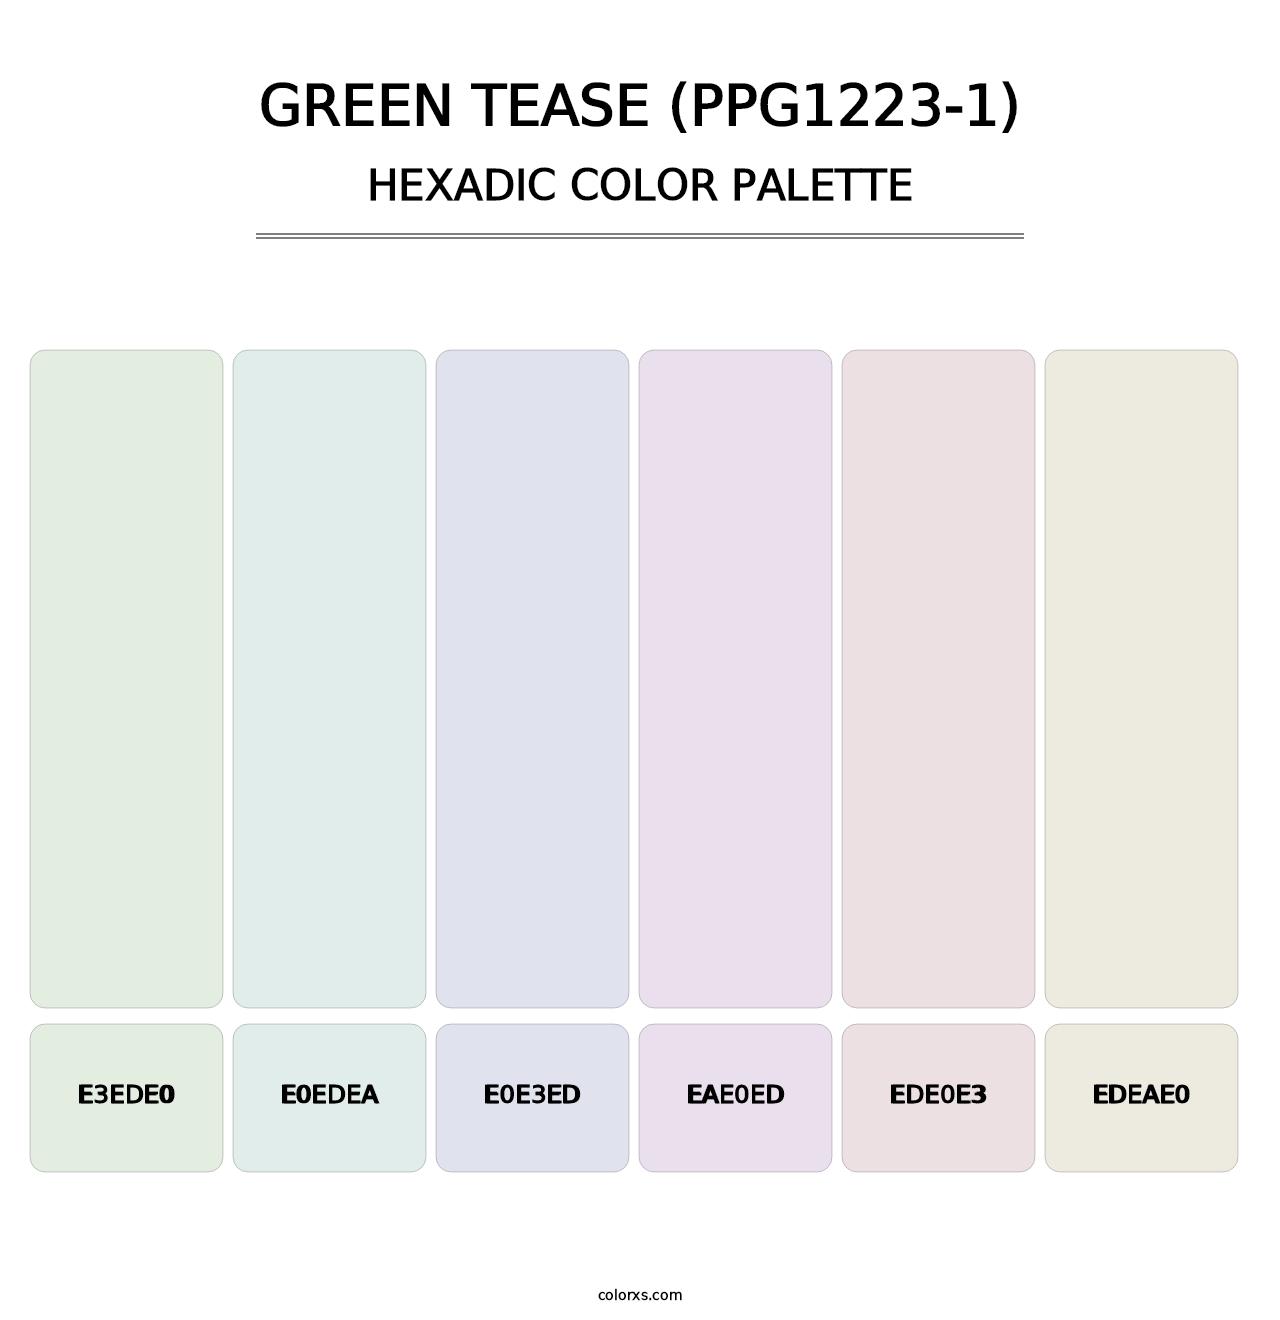 Green Tease (PPG1223-1) - Hexadic Color Palette